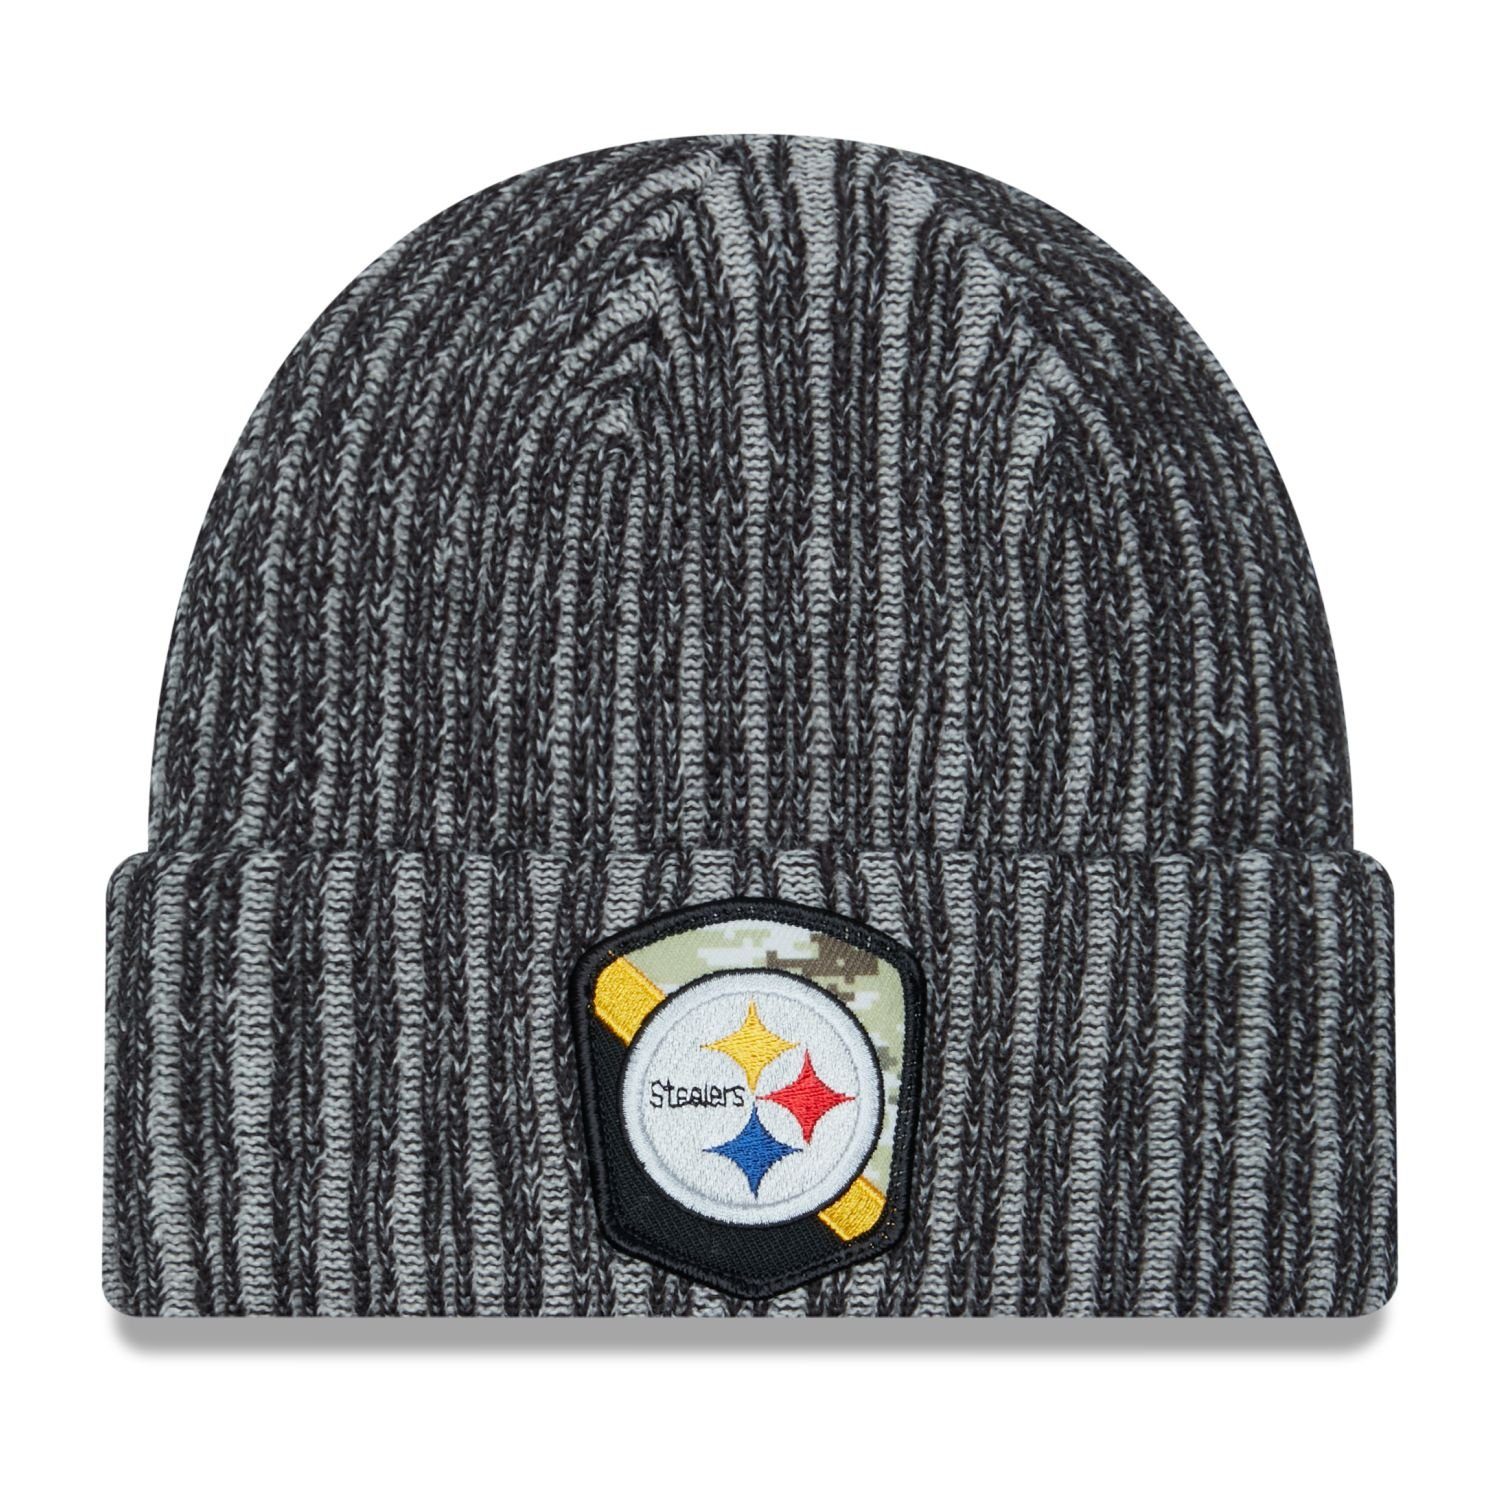 Service NFL Fleecemütze Salute Steelers Knit Beanie to Era Pittsburgh New